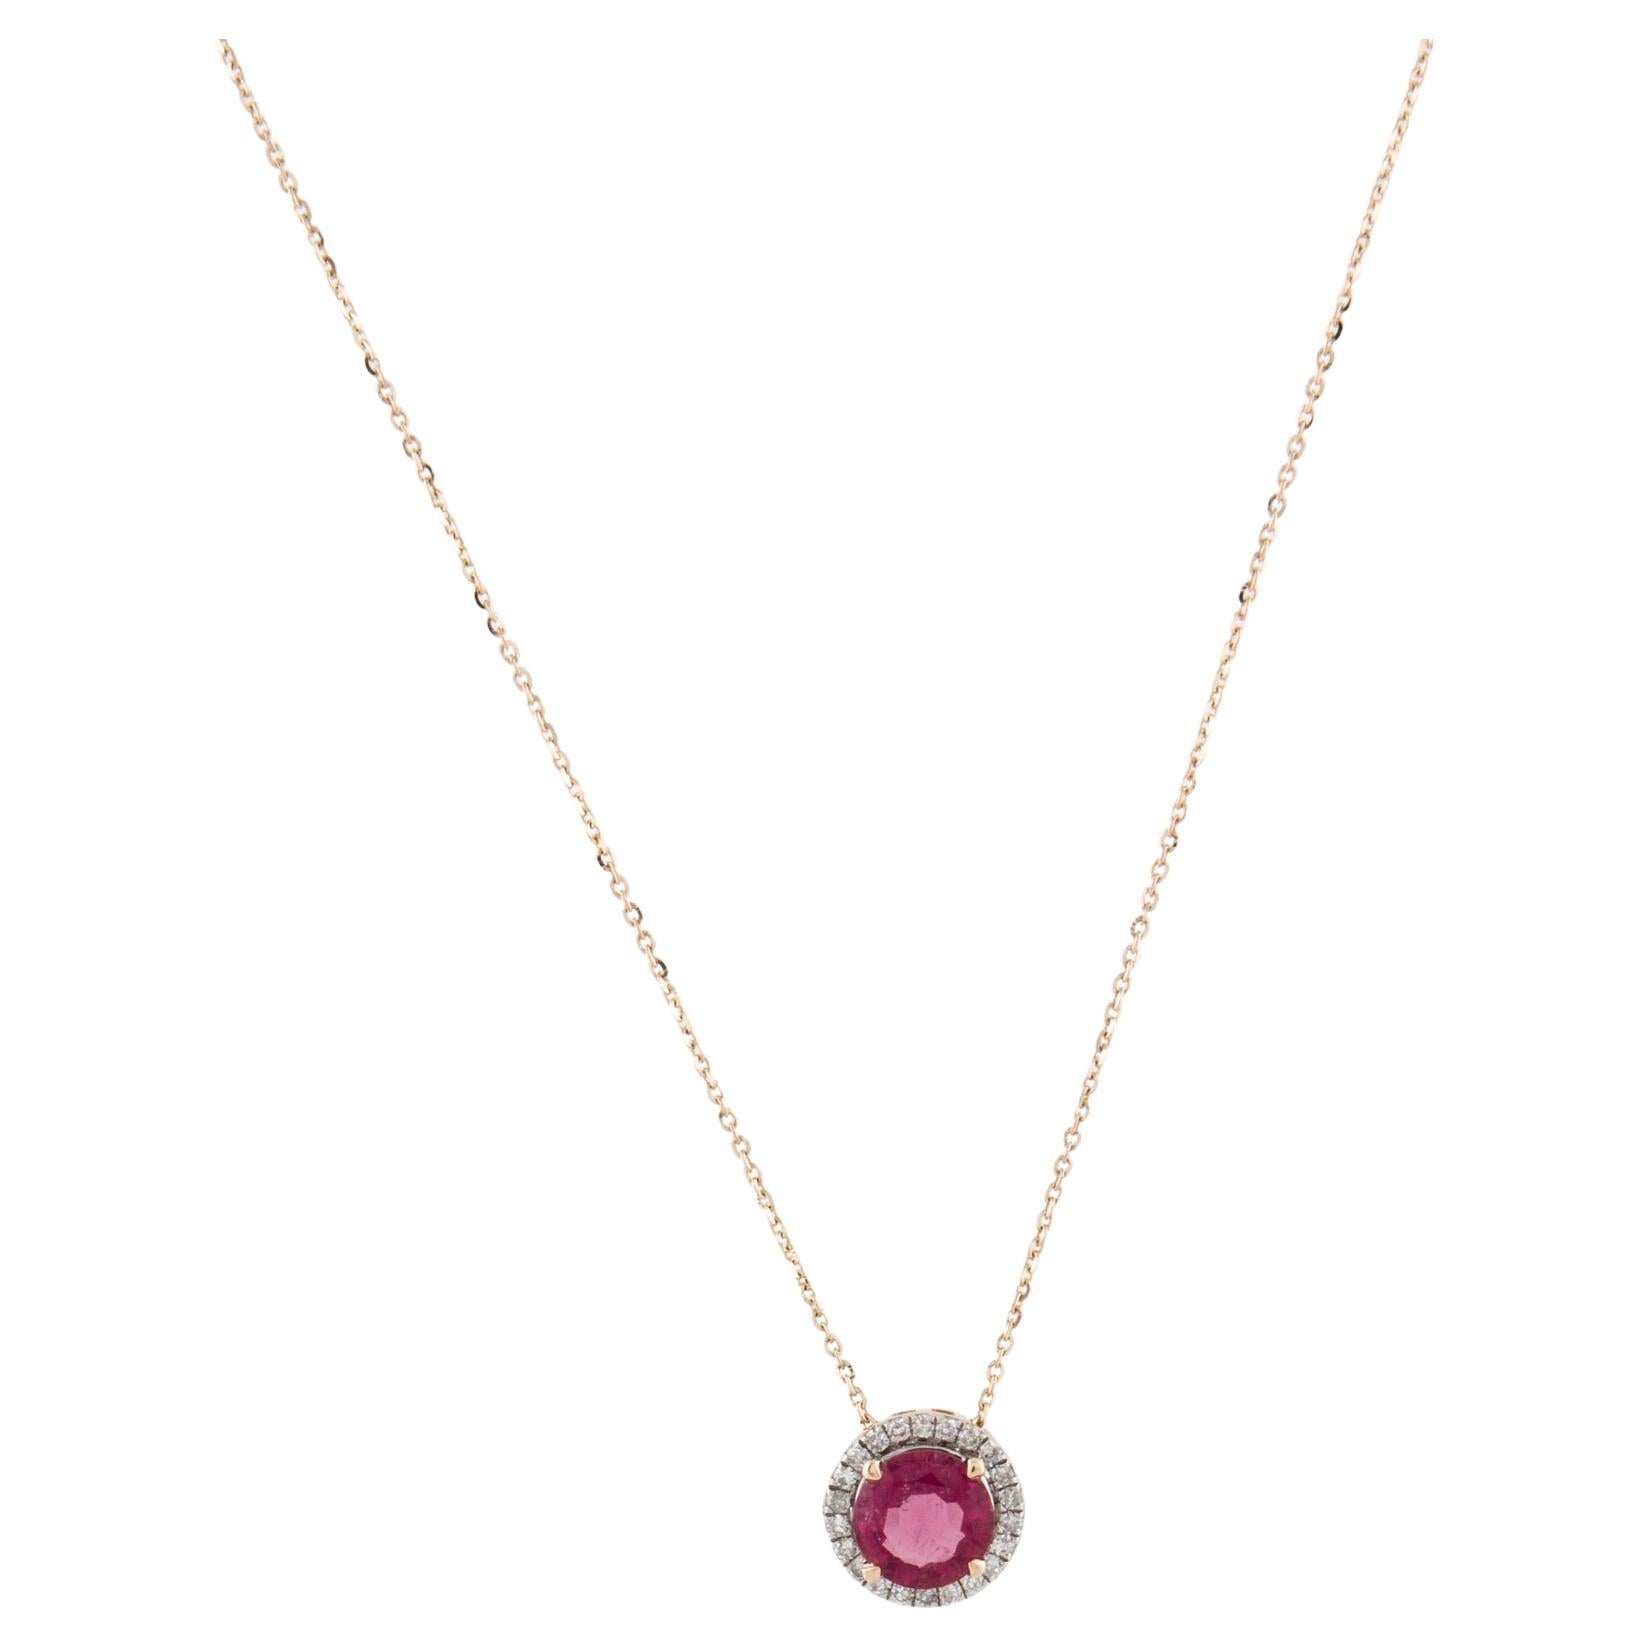 14K 1.09ct Tourmaline & Diamond Pendant Necklace: Luxury Statement Jewelry Piece For Sale